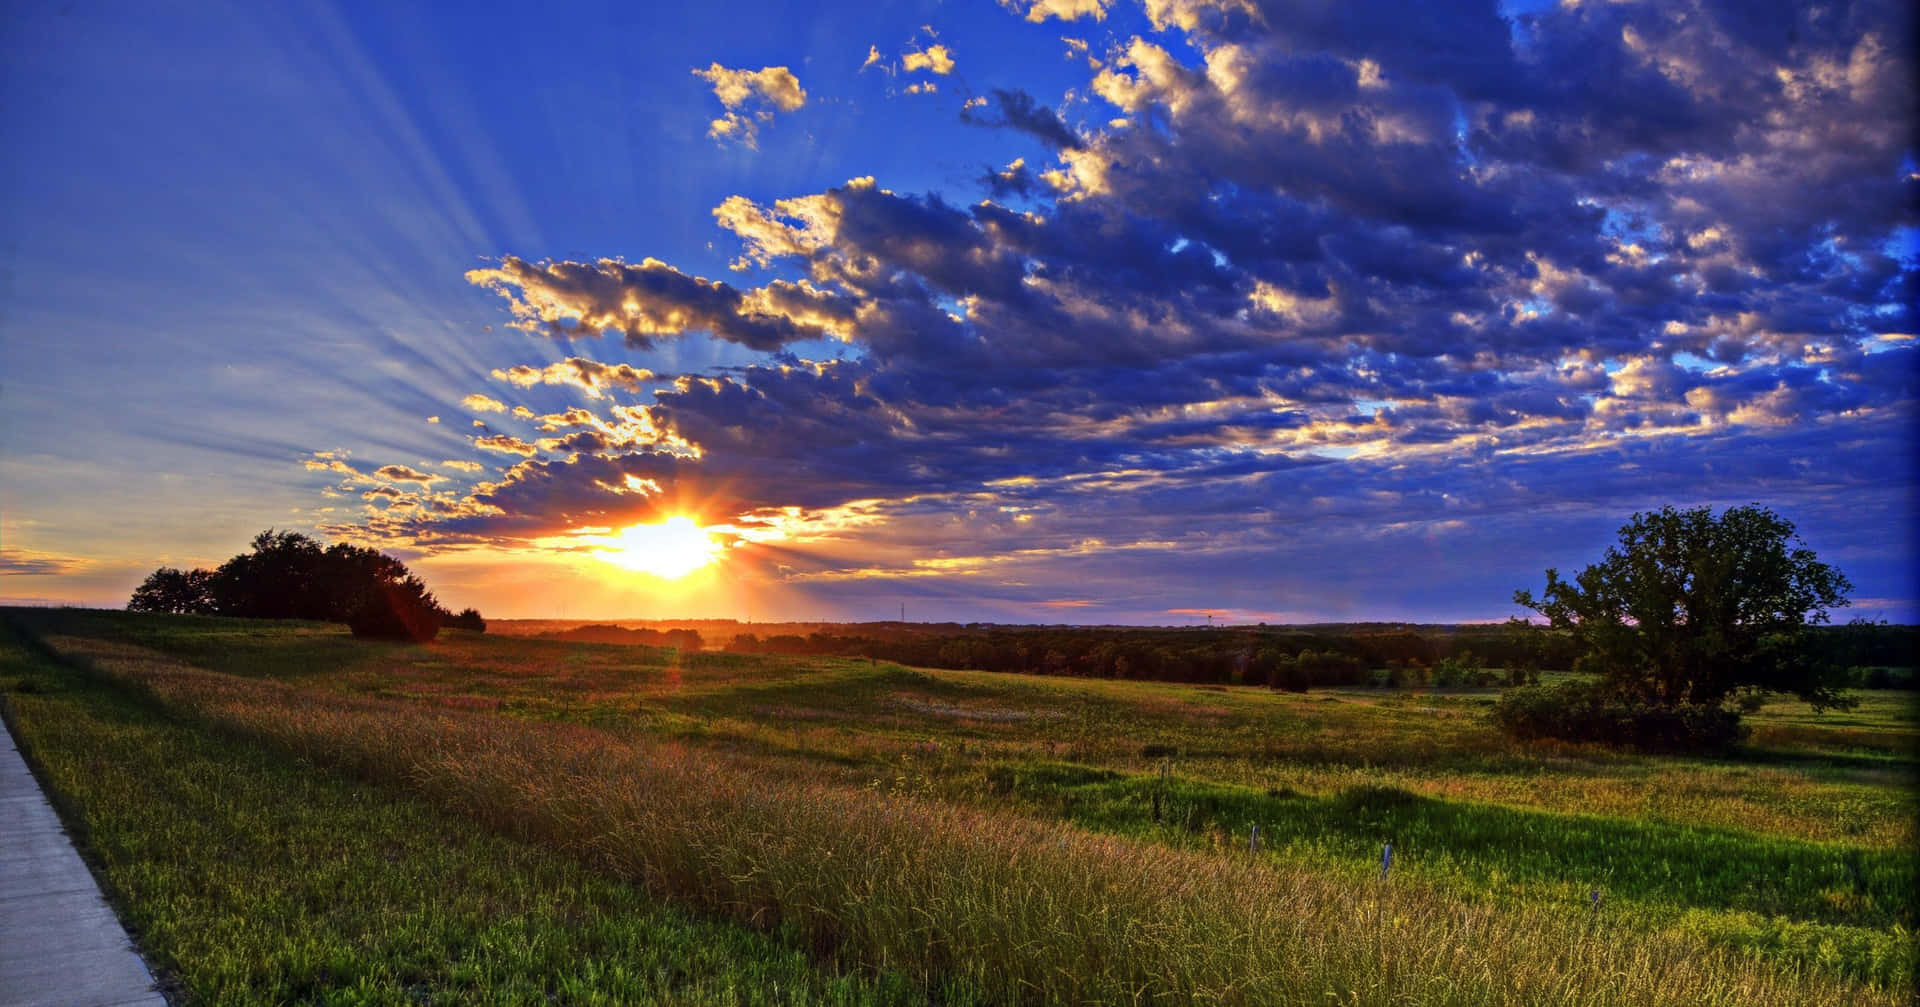 The wheat fields of North Dakota at sundown